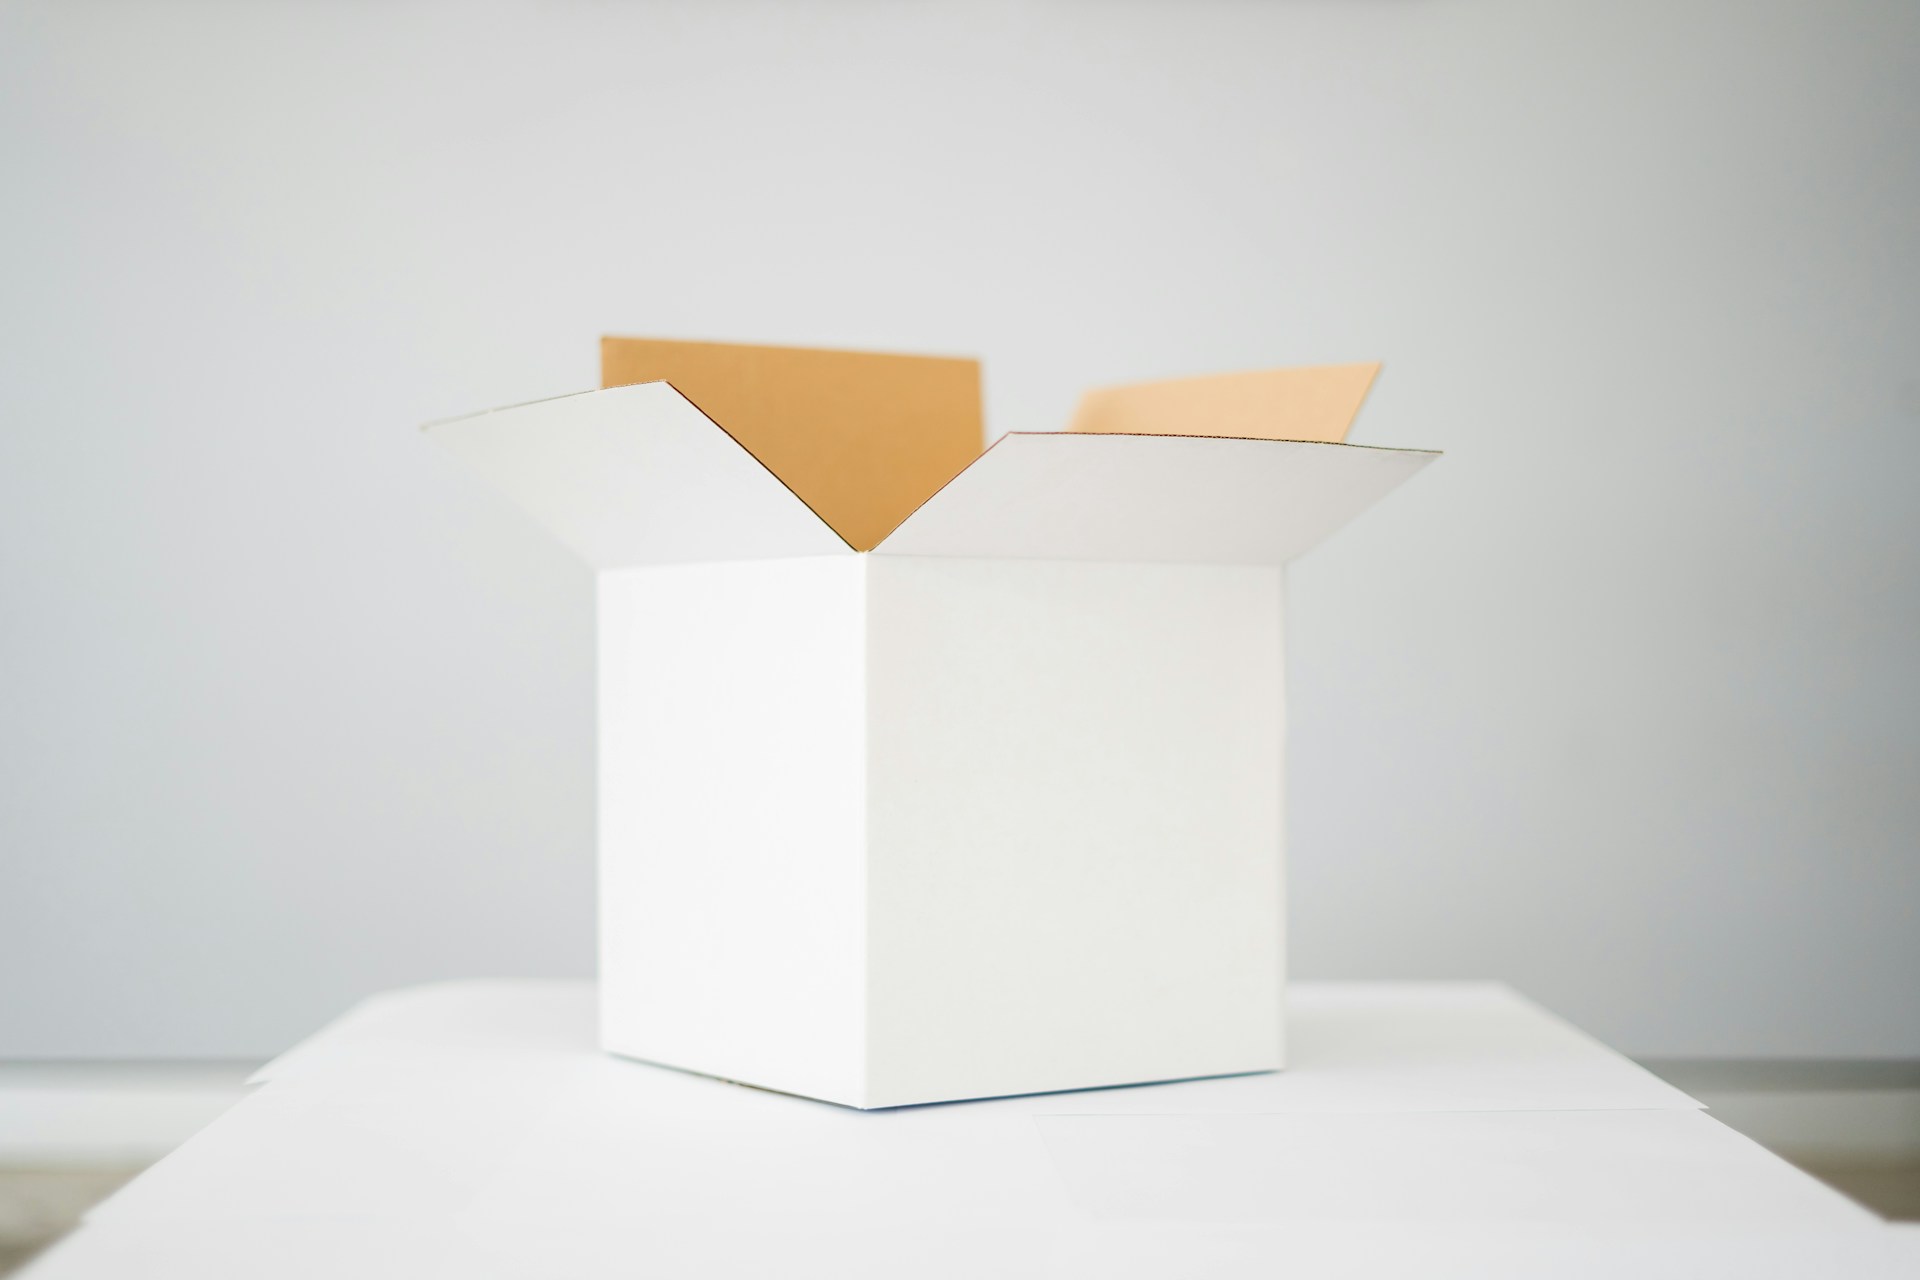 description: A white cardboard box, open, on a table. Photo by Kelli McClintock on Unsplash.